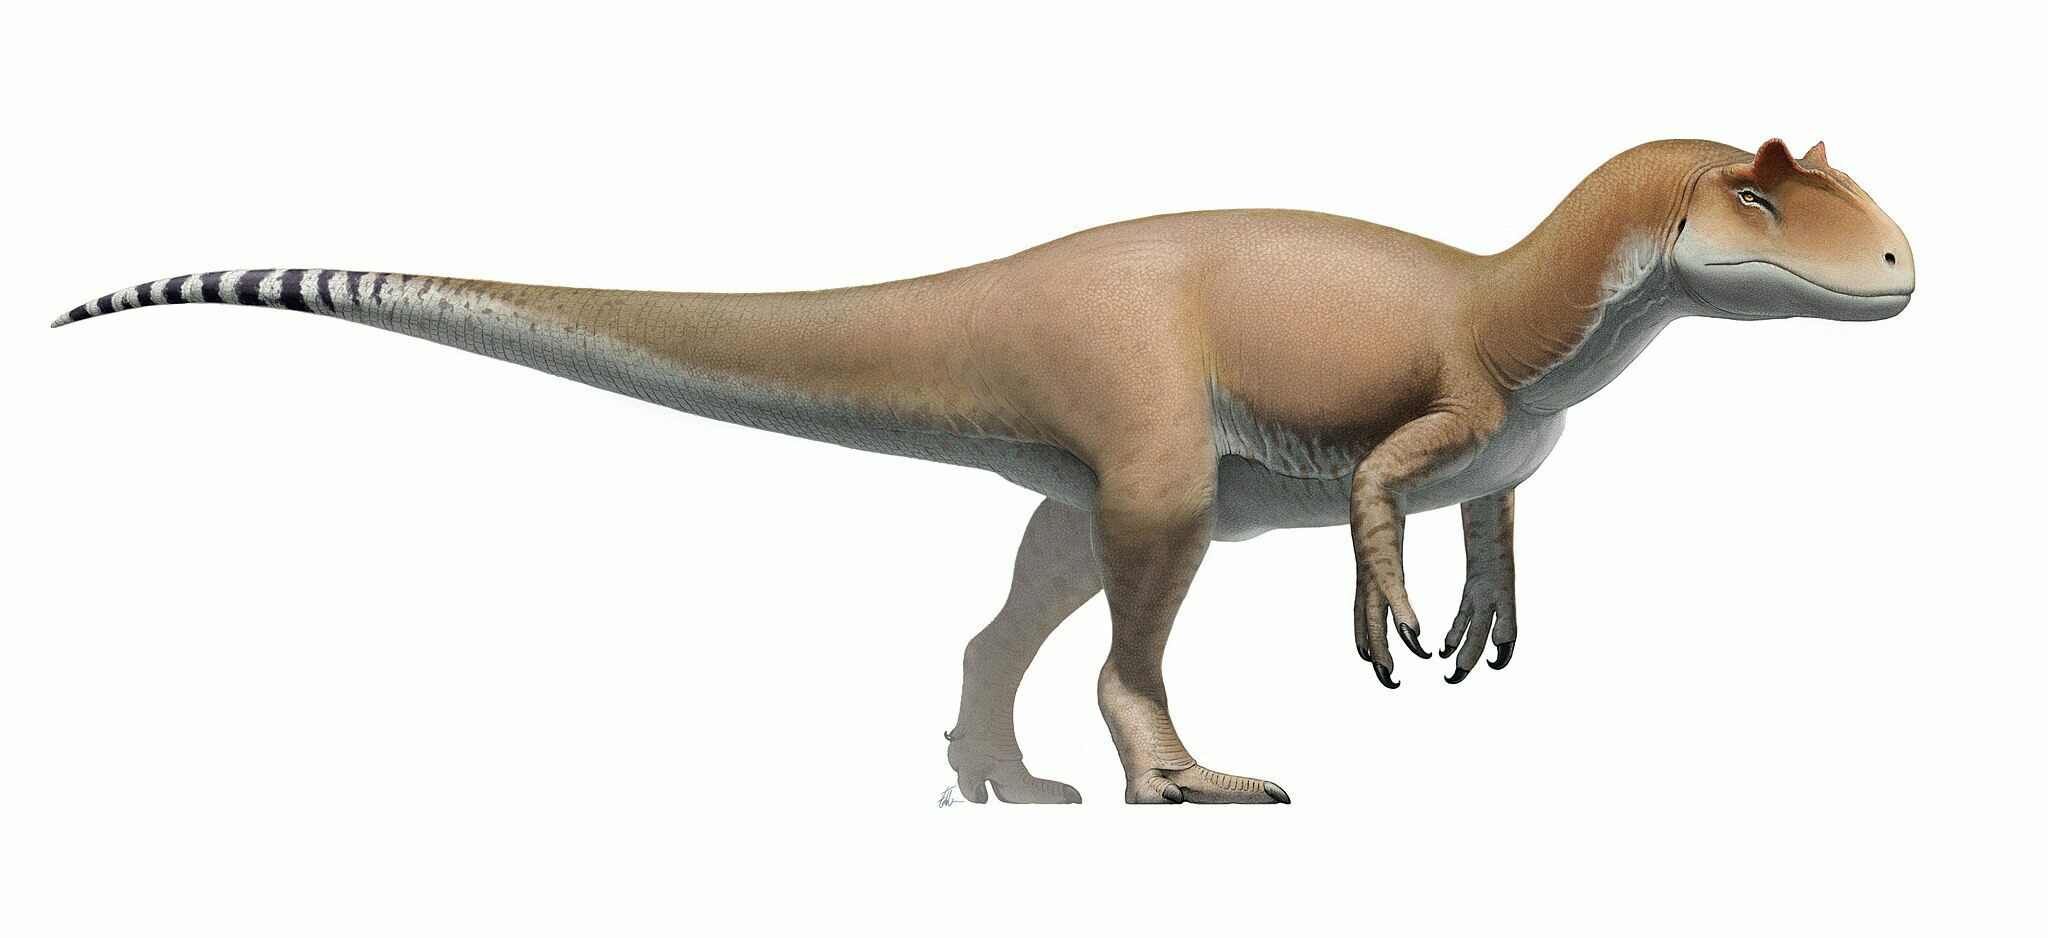 Utah State Fossil - Allosaurus - FossilEra.com